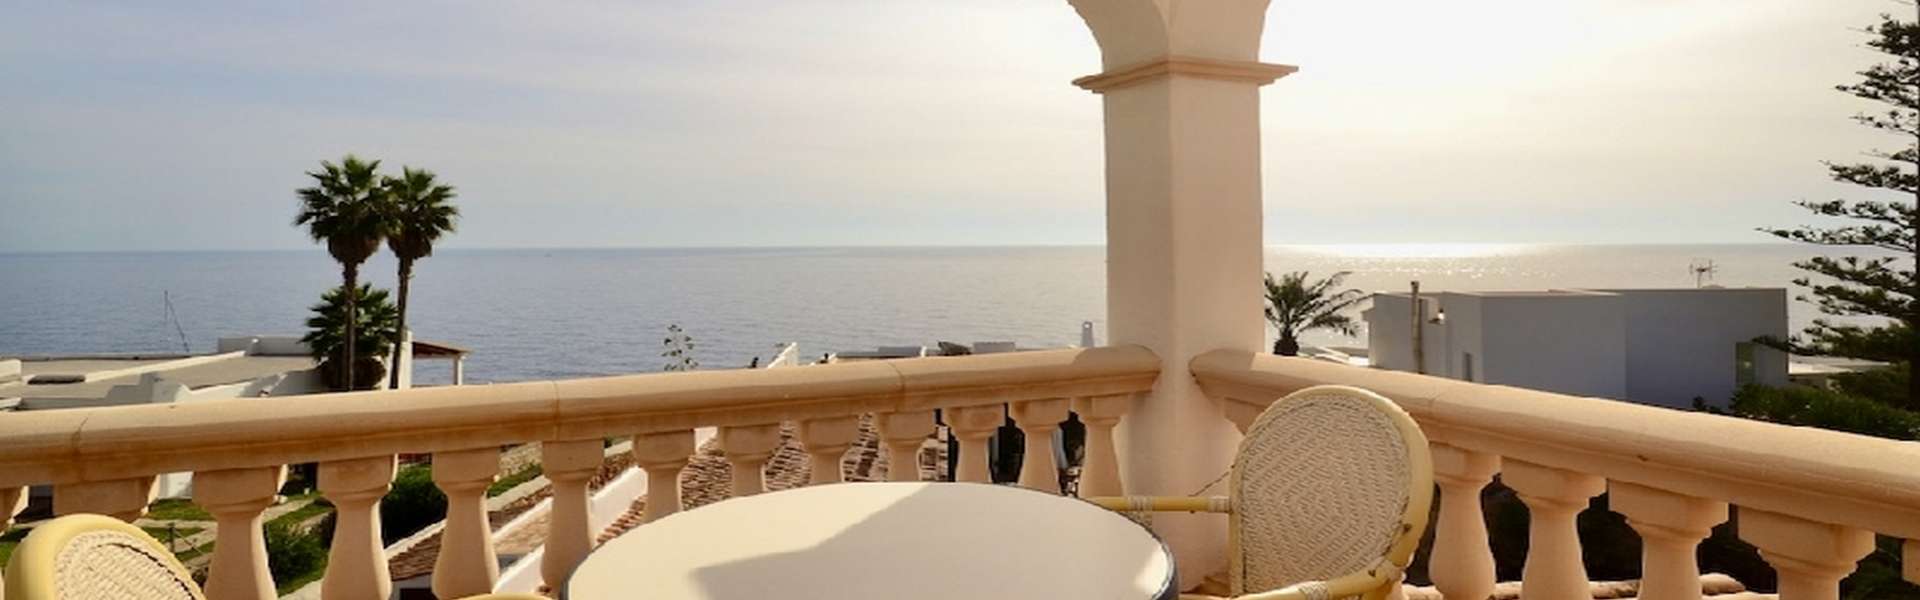 Cala d'Or/Cala Serena - Spacious villa in 2nd line with sea views 